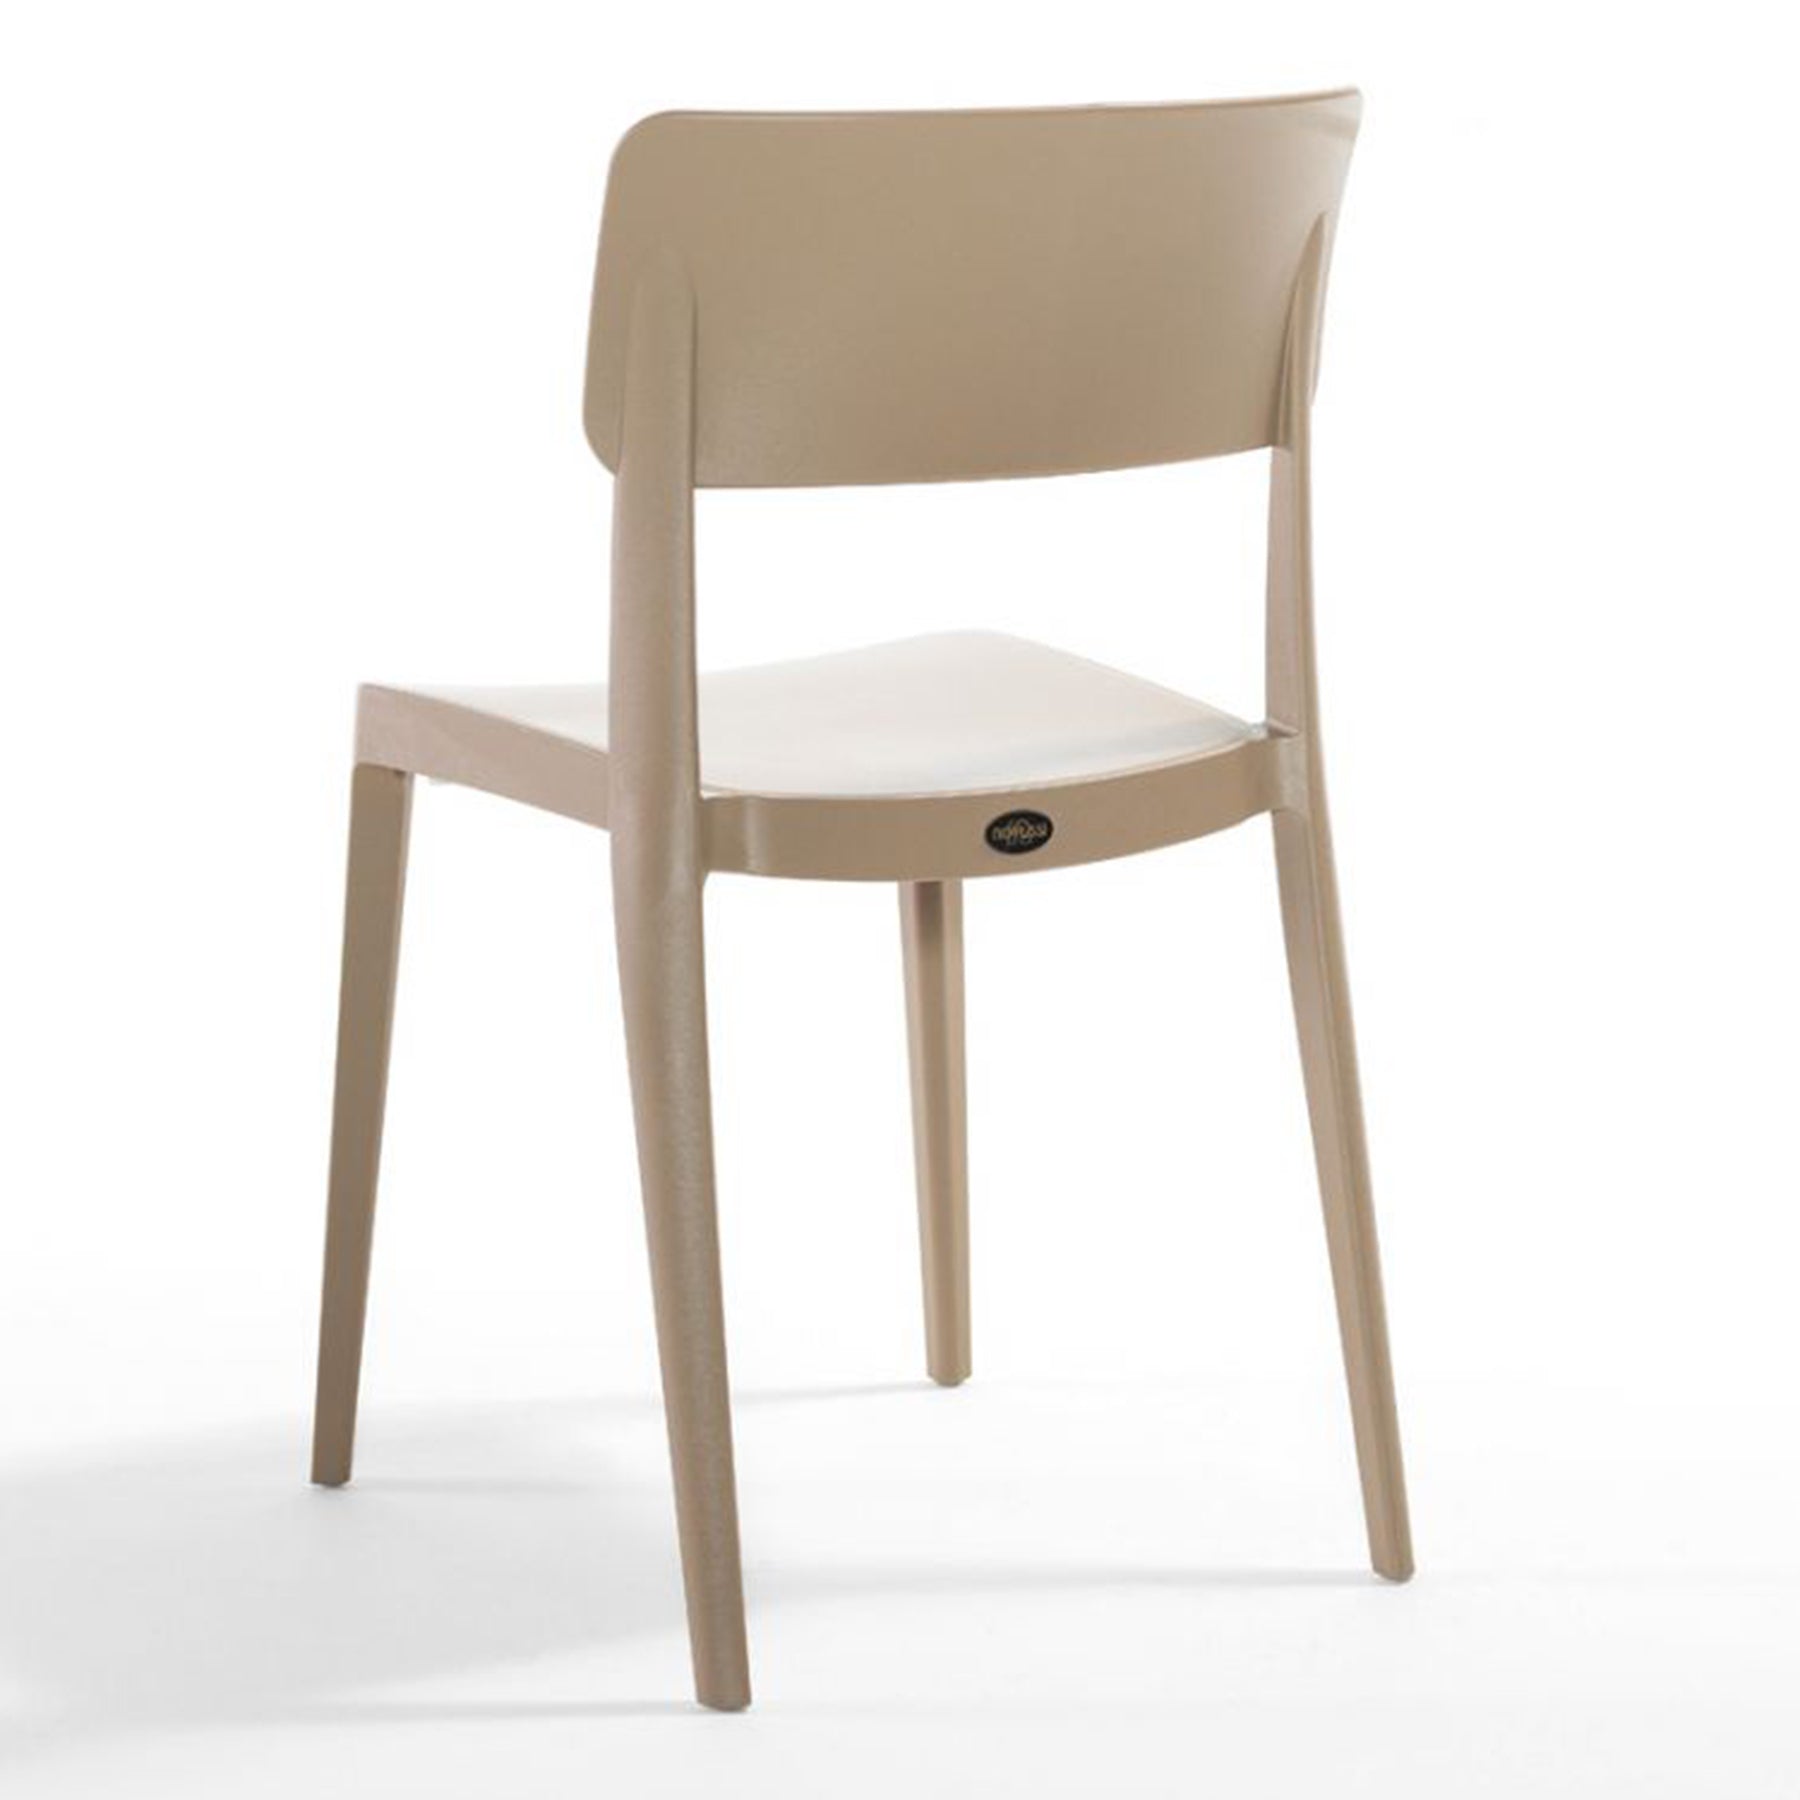 Plastic chair - Beige